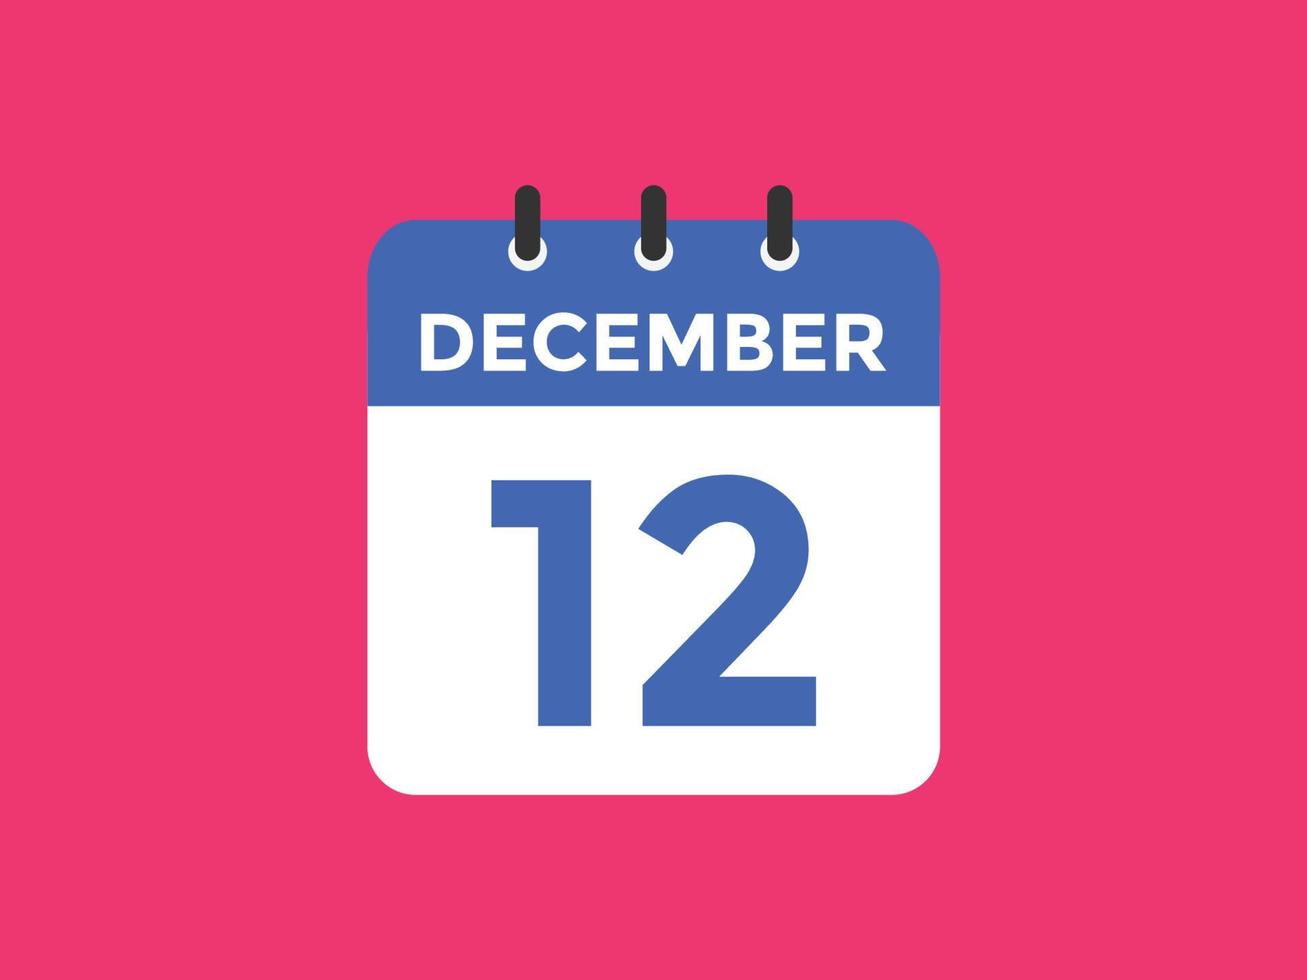 december 12 calendar reminder. 12th december daily calendar icon template. Calendar 12th december icon Design template. Vector illustration